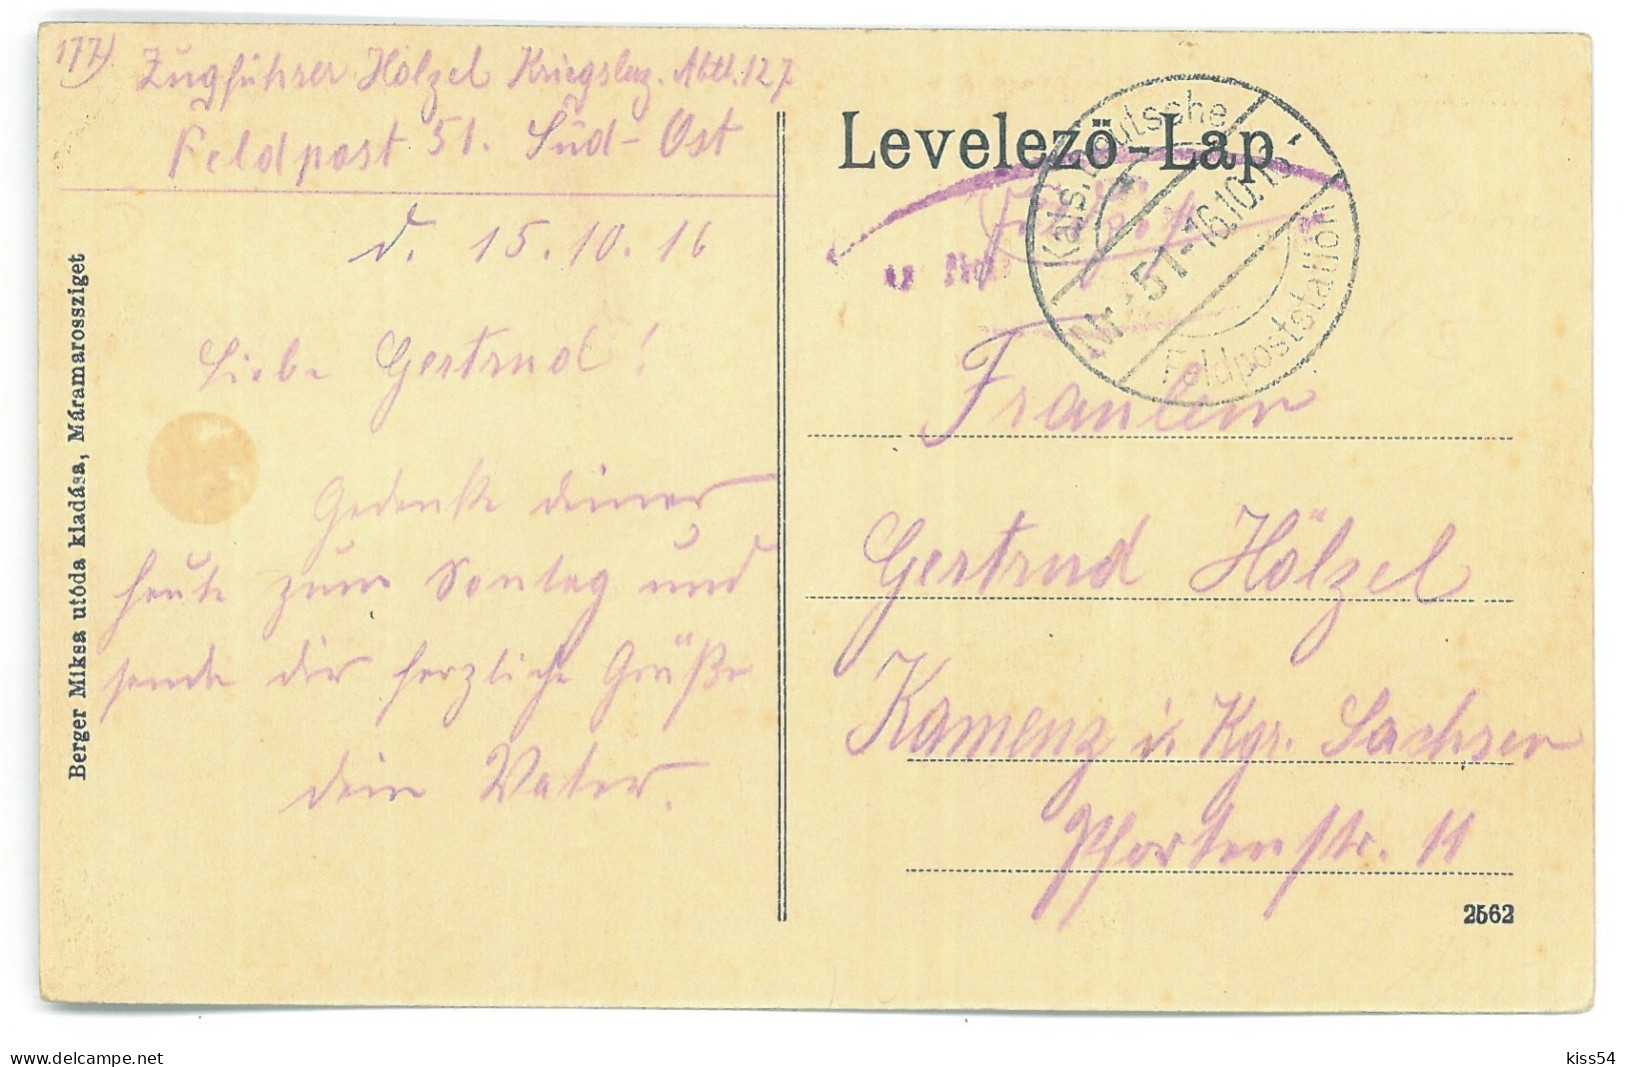 RO 09 - 25143 OCNA SUGATAG, Maramures, Market, Romania - Old Postcard, CENSOR - Used - 1916 - Romania